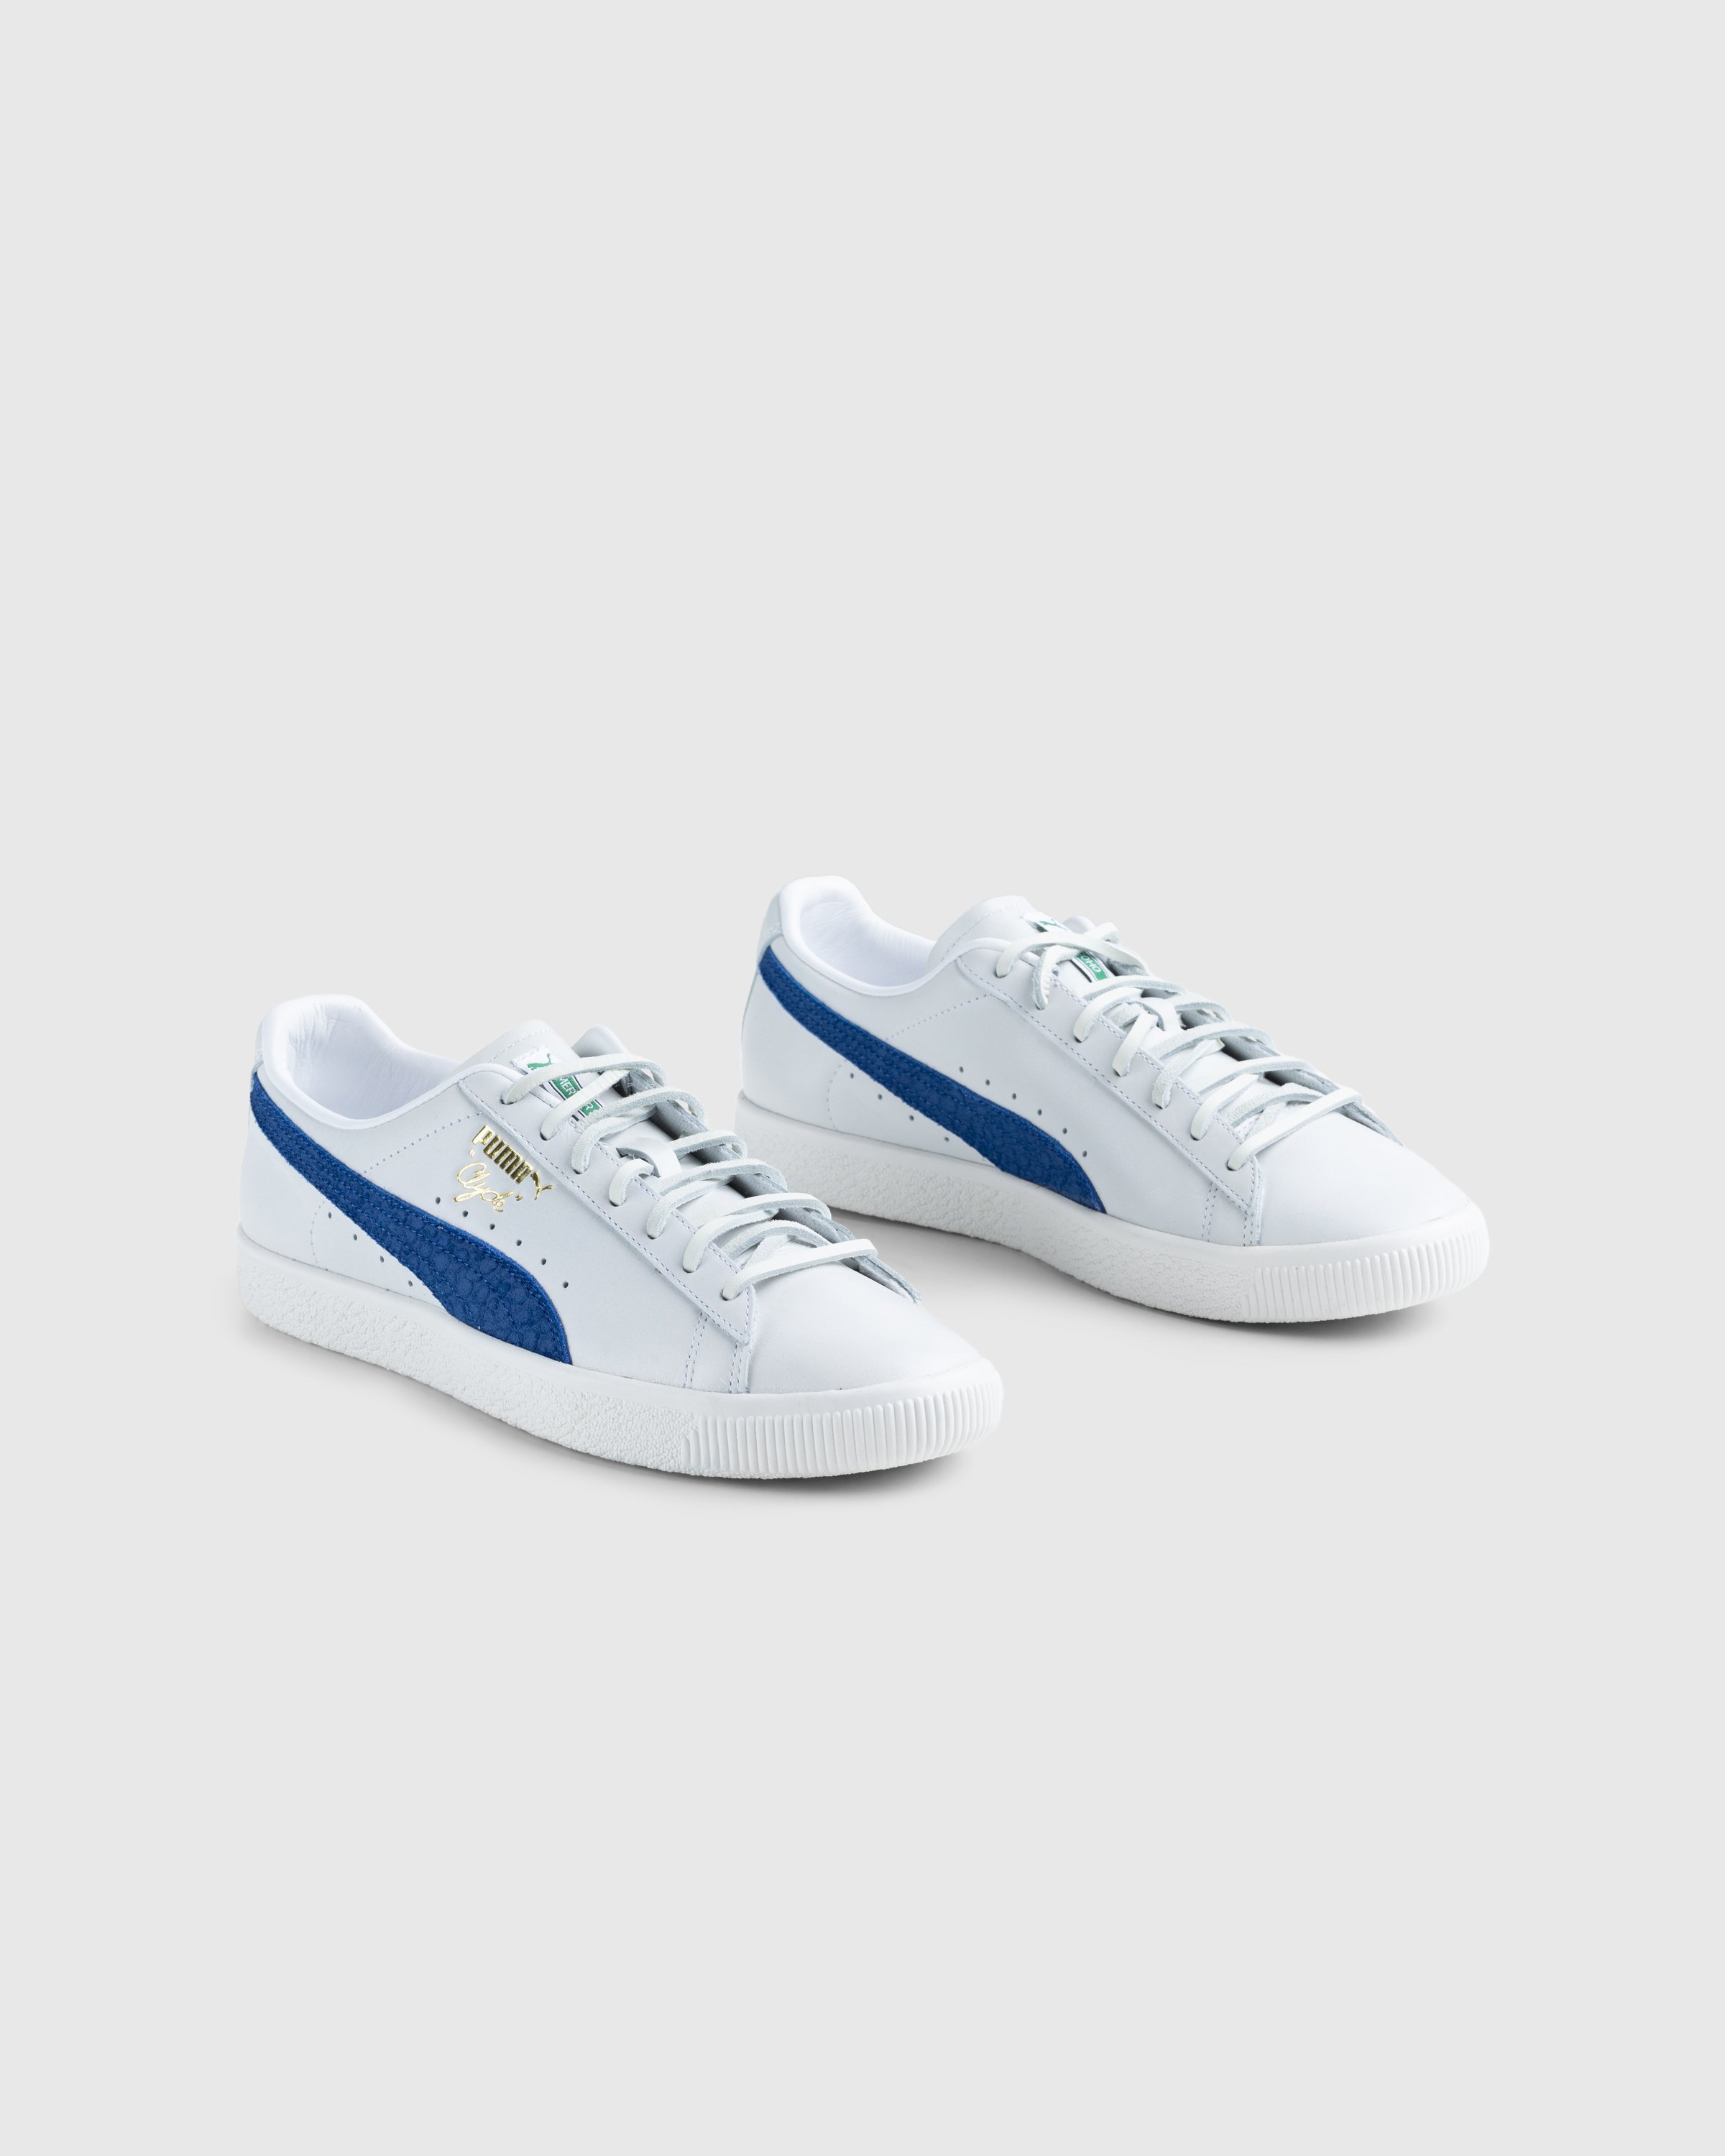 Puma - Clyde Soho (NYC) - Footwear - White - Image 3